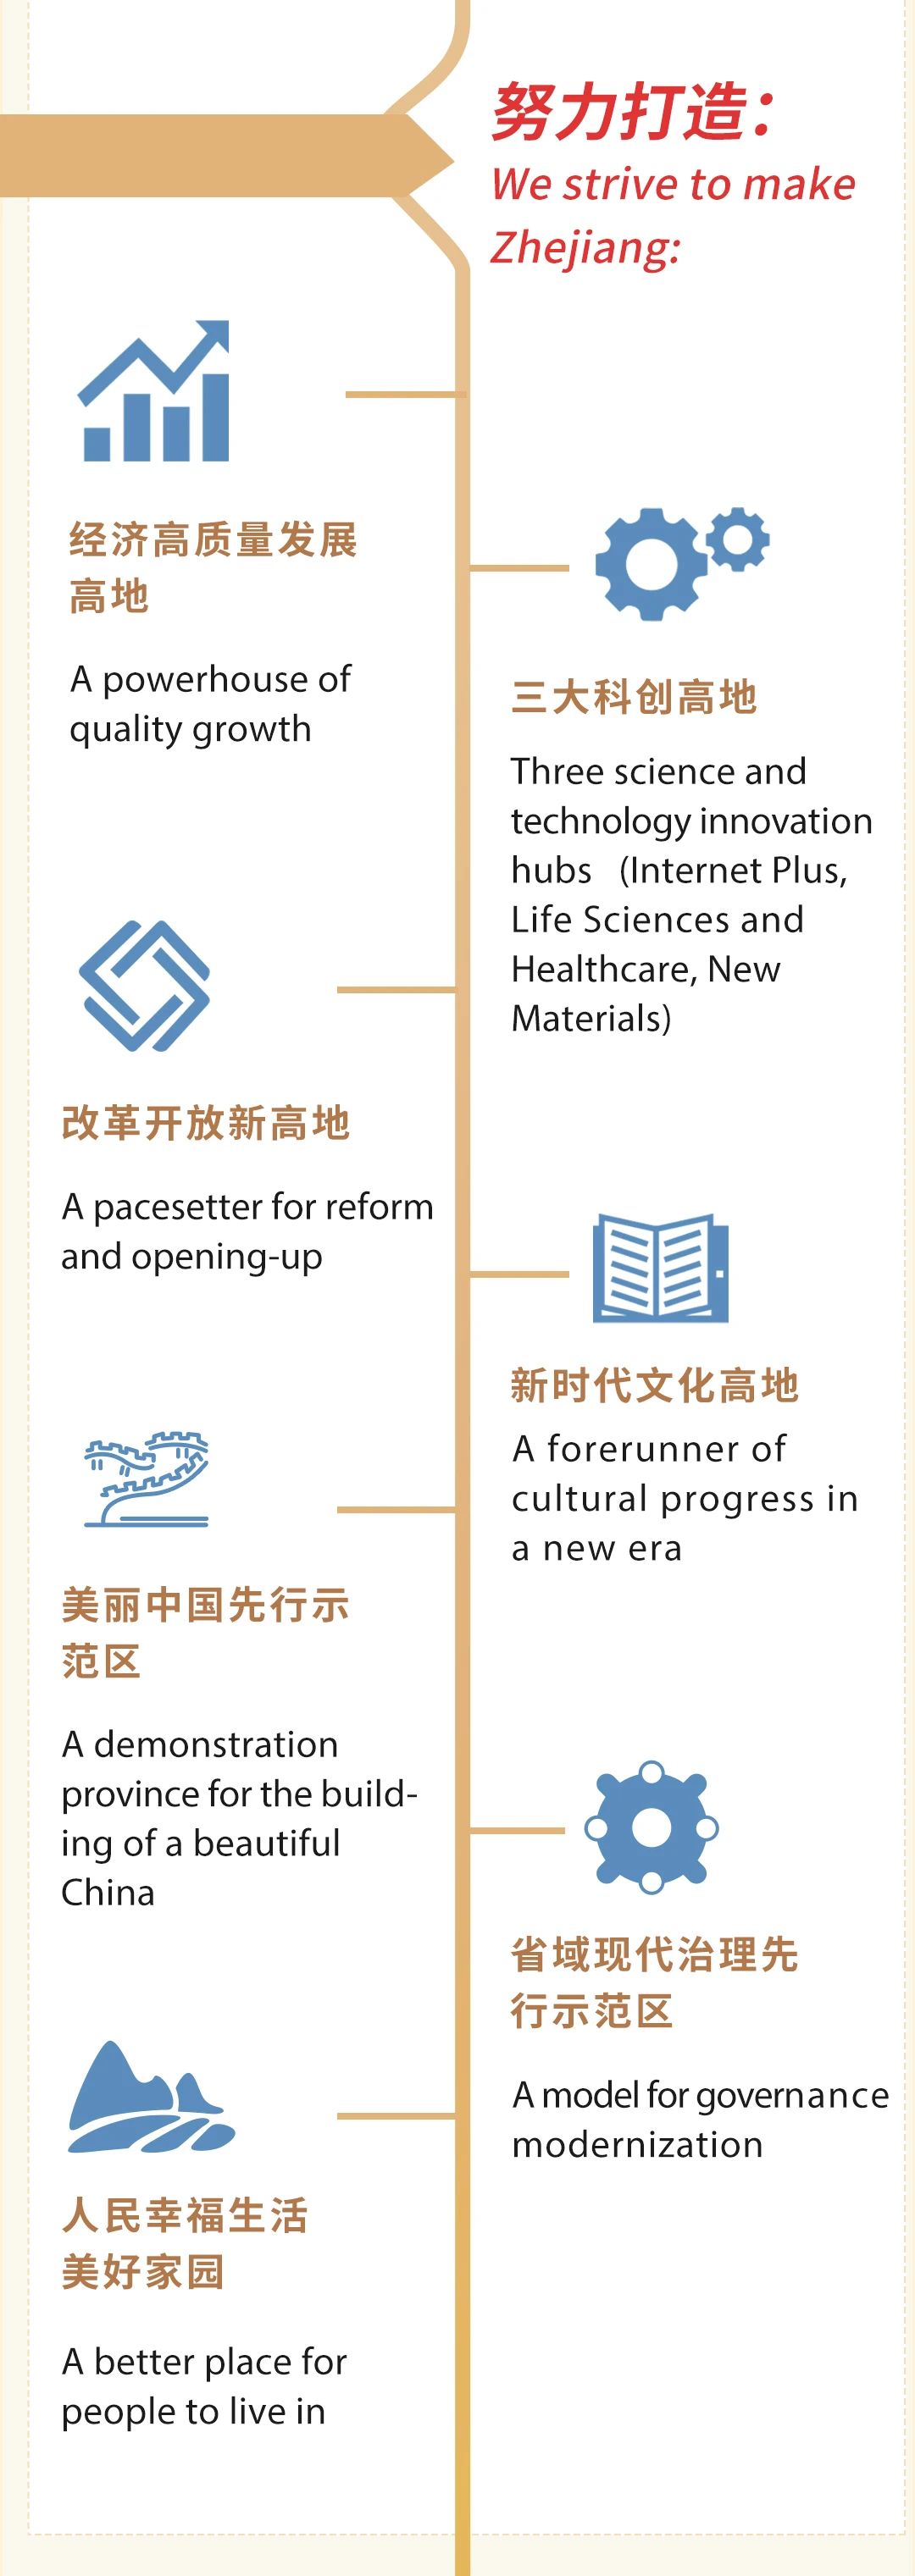 Zhejiang Govt Report 14th Five Year Plan 3.jpg